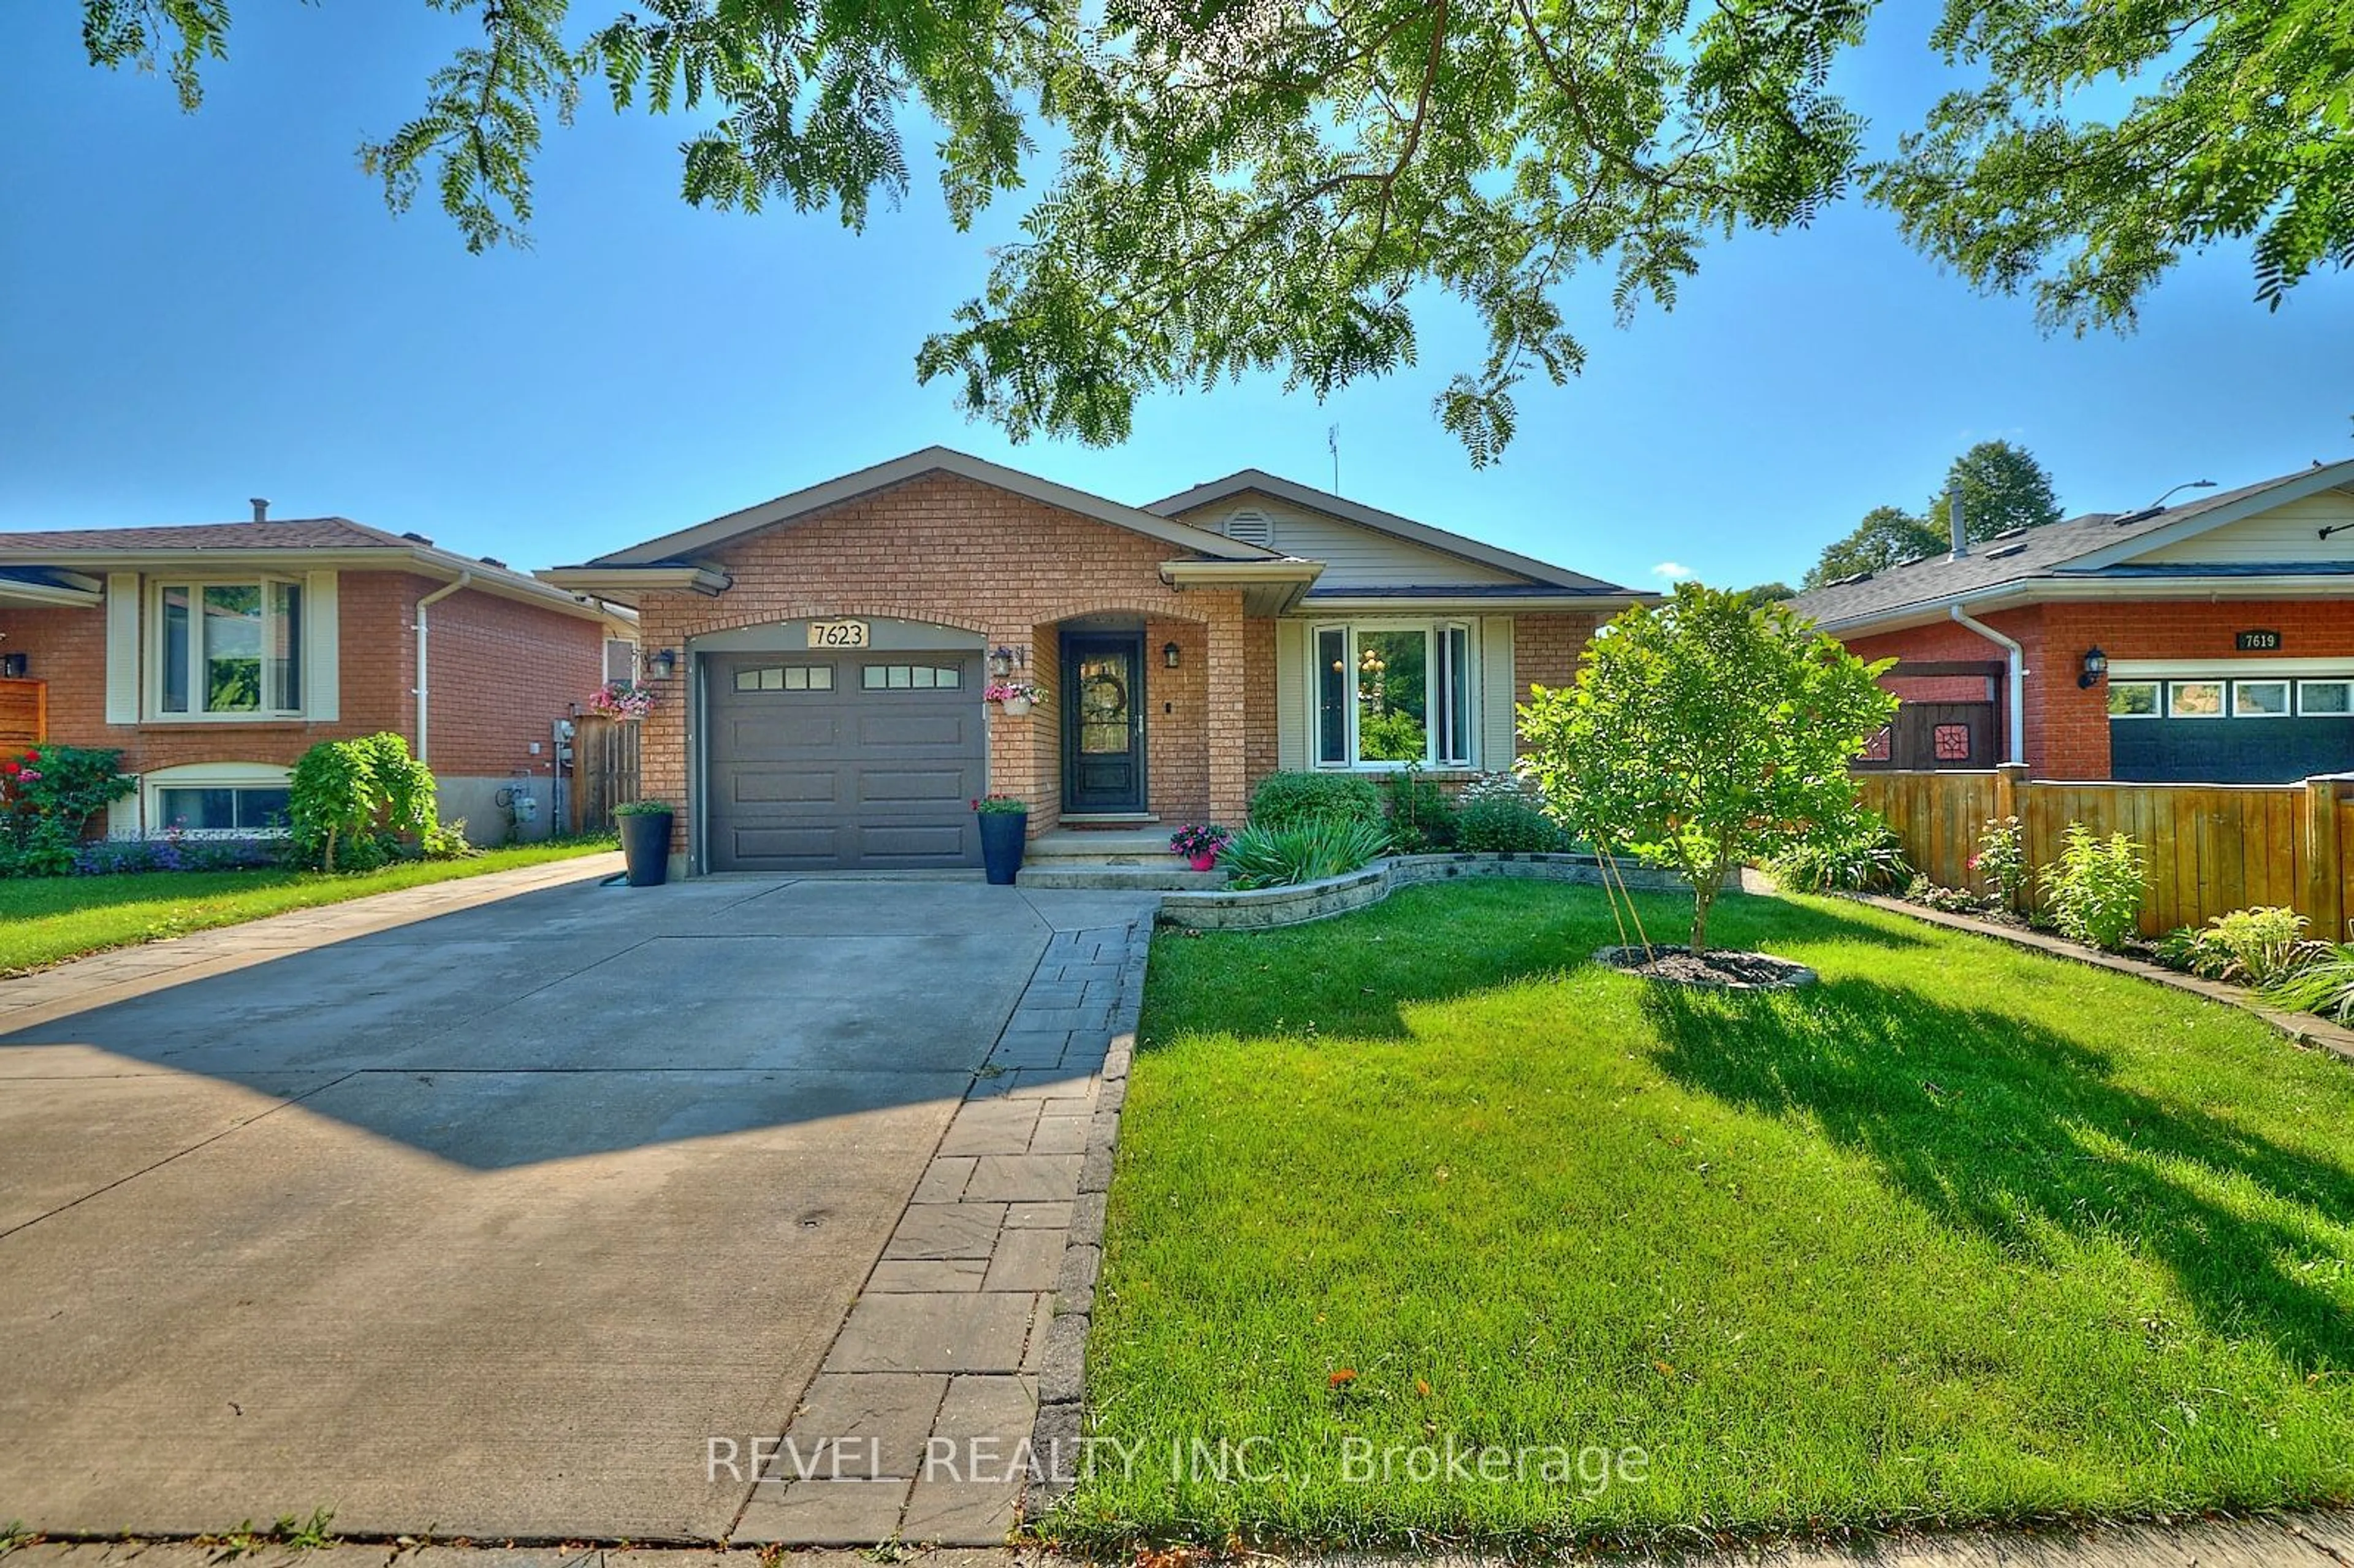 Home with brick exterior material for 7623 Cavendish Dr, Niagara Falls Ontario L2H 2T8